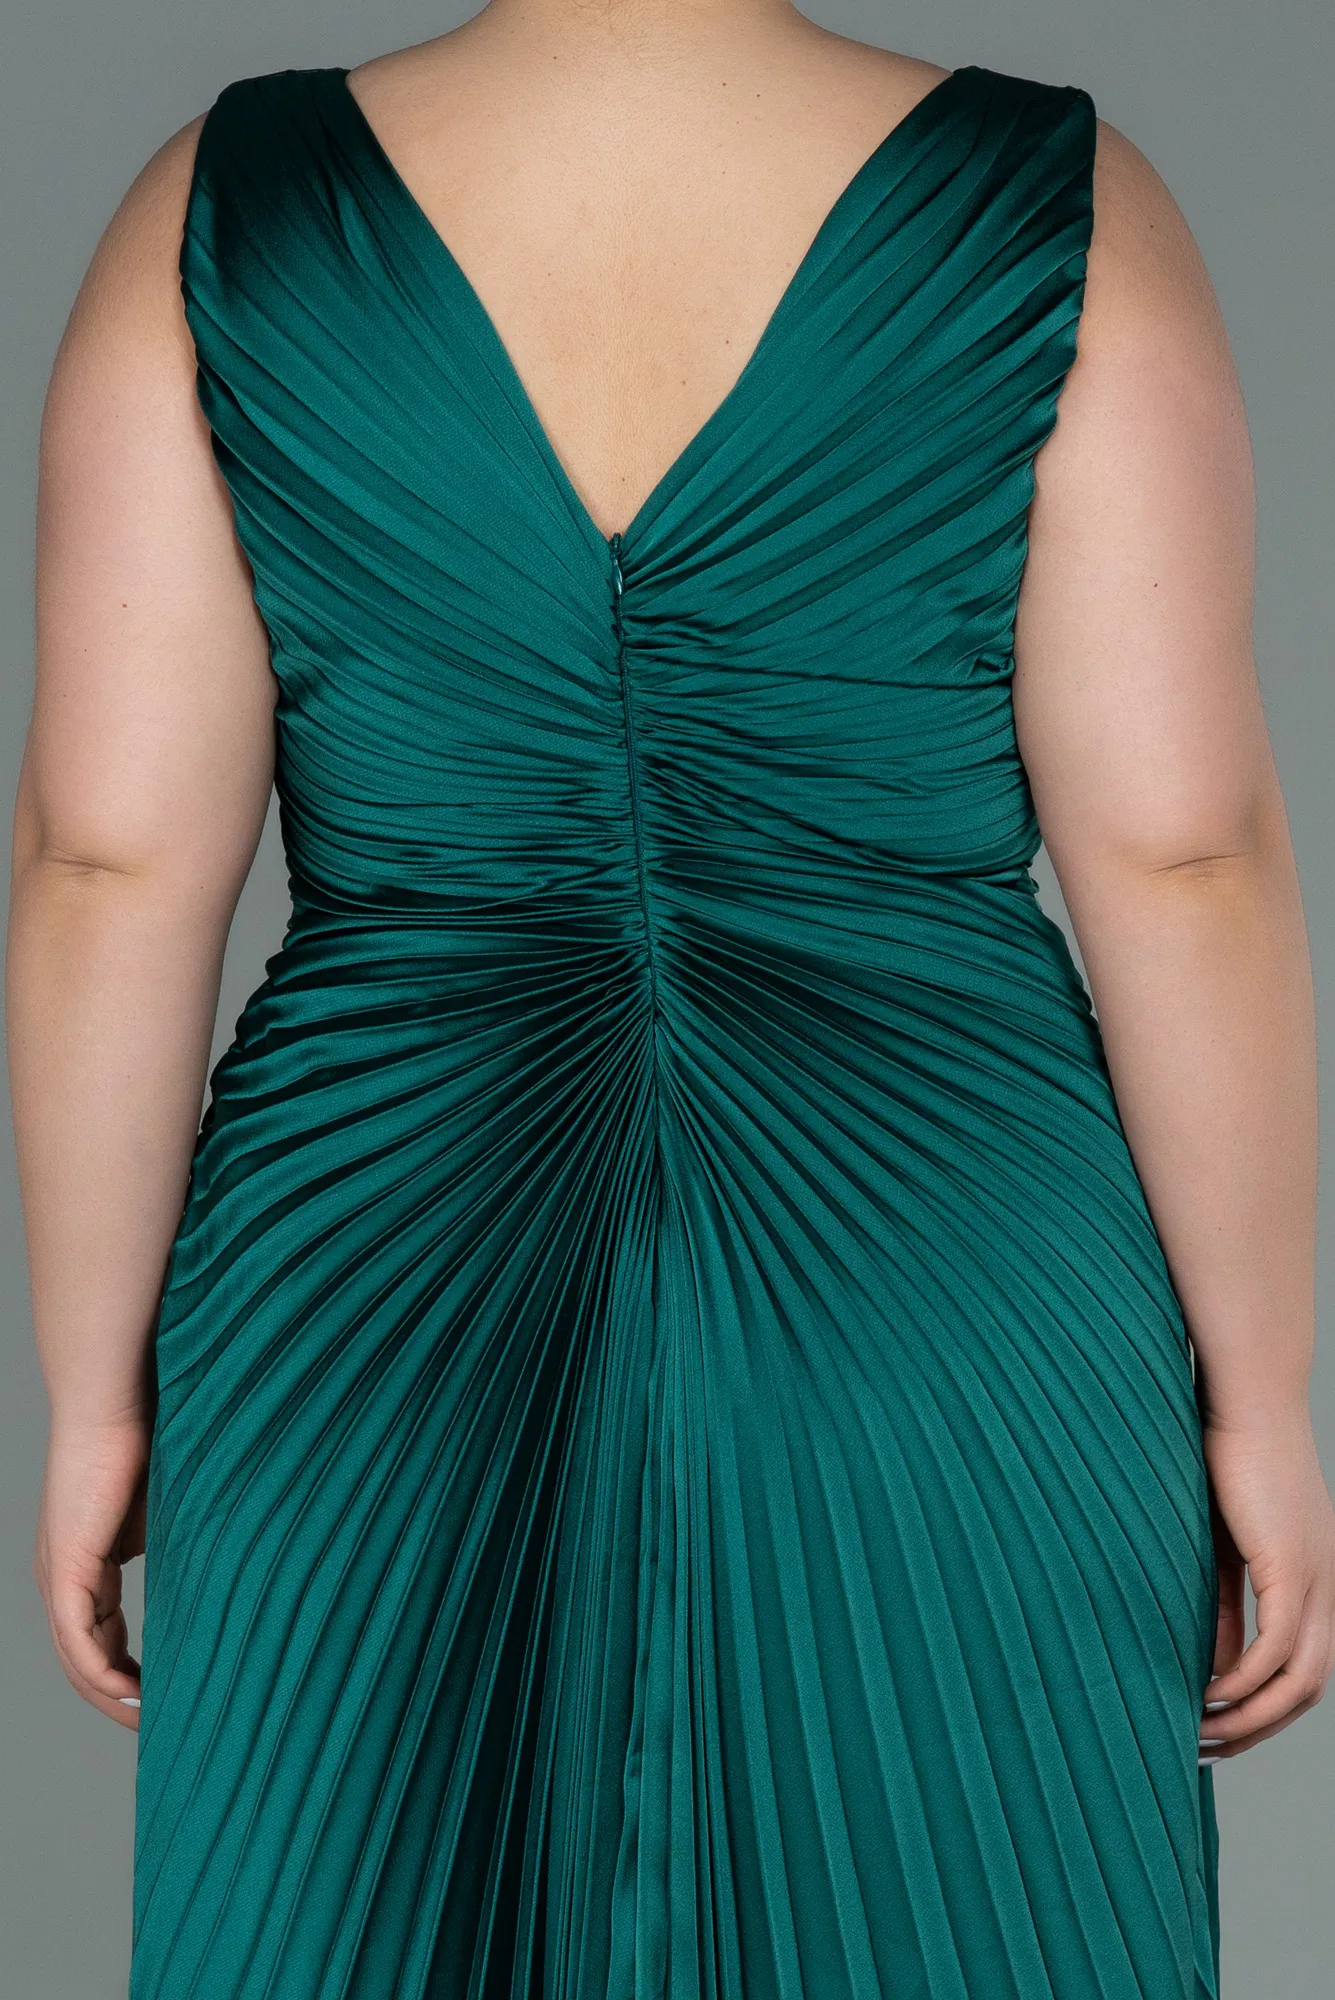 Emerald Green-Long Satin Plus Size Evening Dress ABU3076